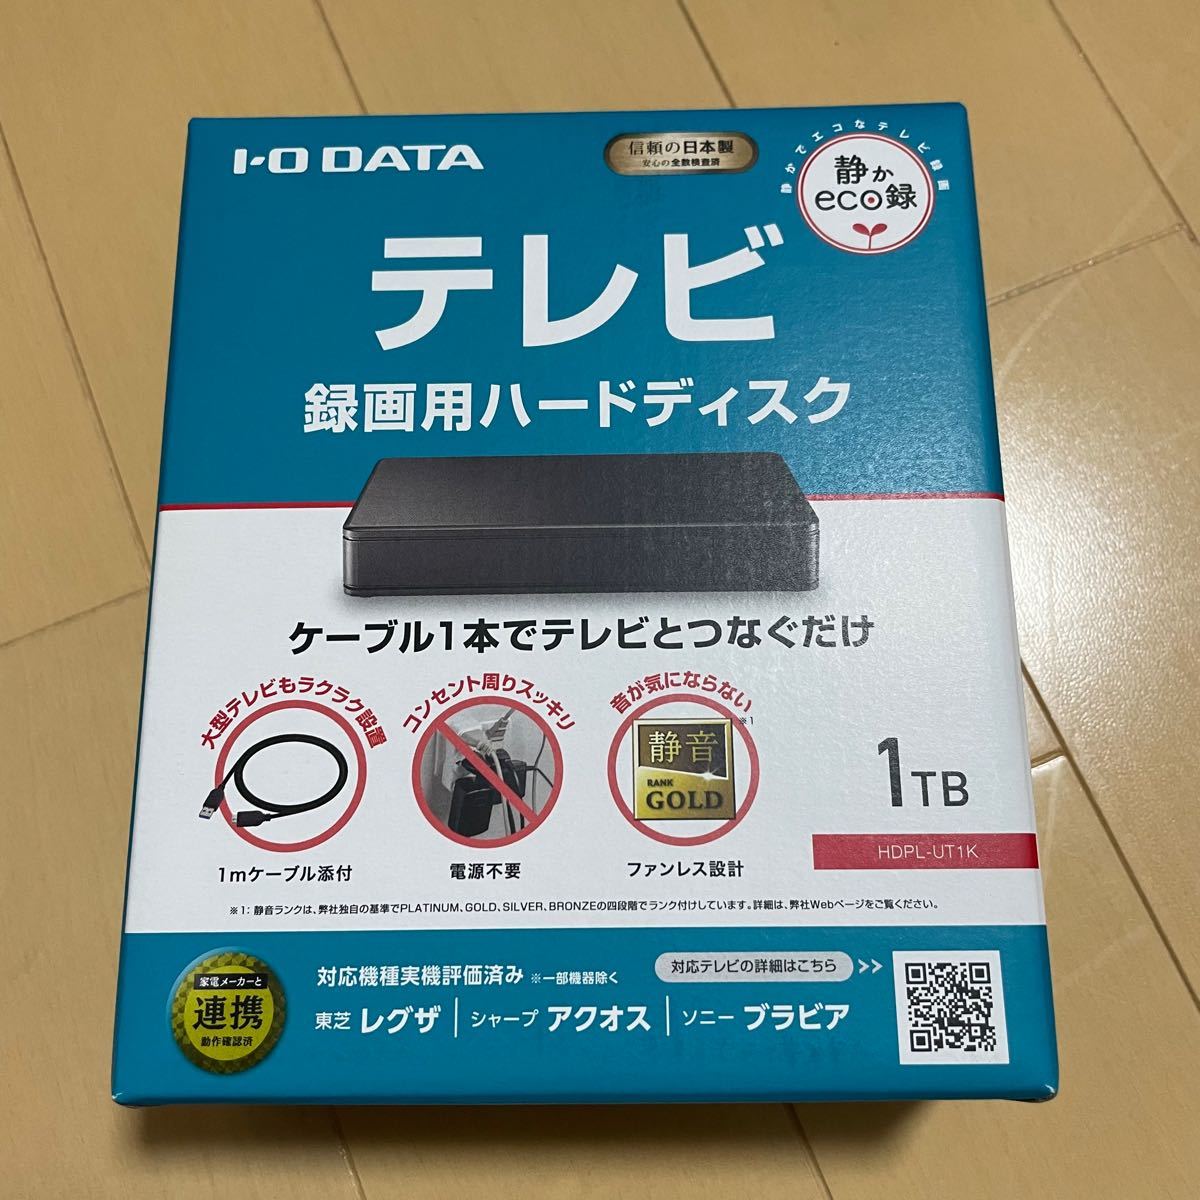 I-O DATA 1TB 外付けHDDHDPL-UT1K ポータブルハードディスク